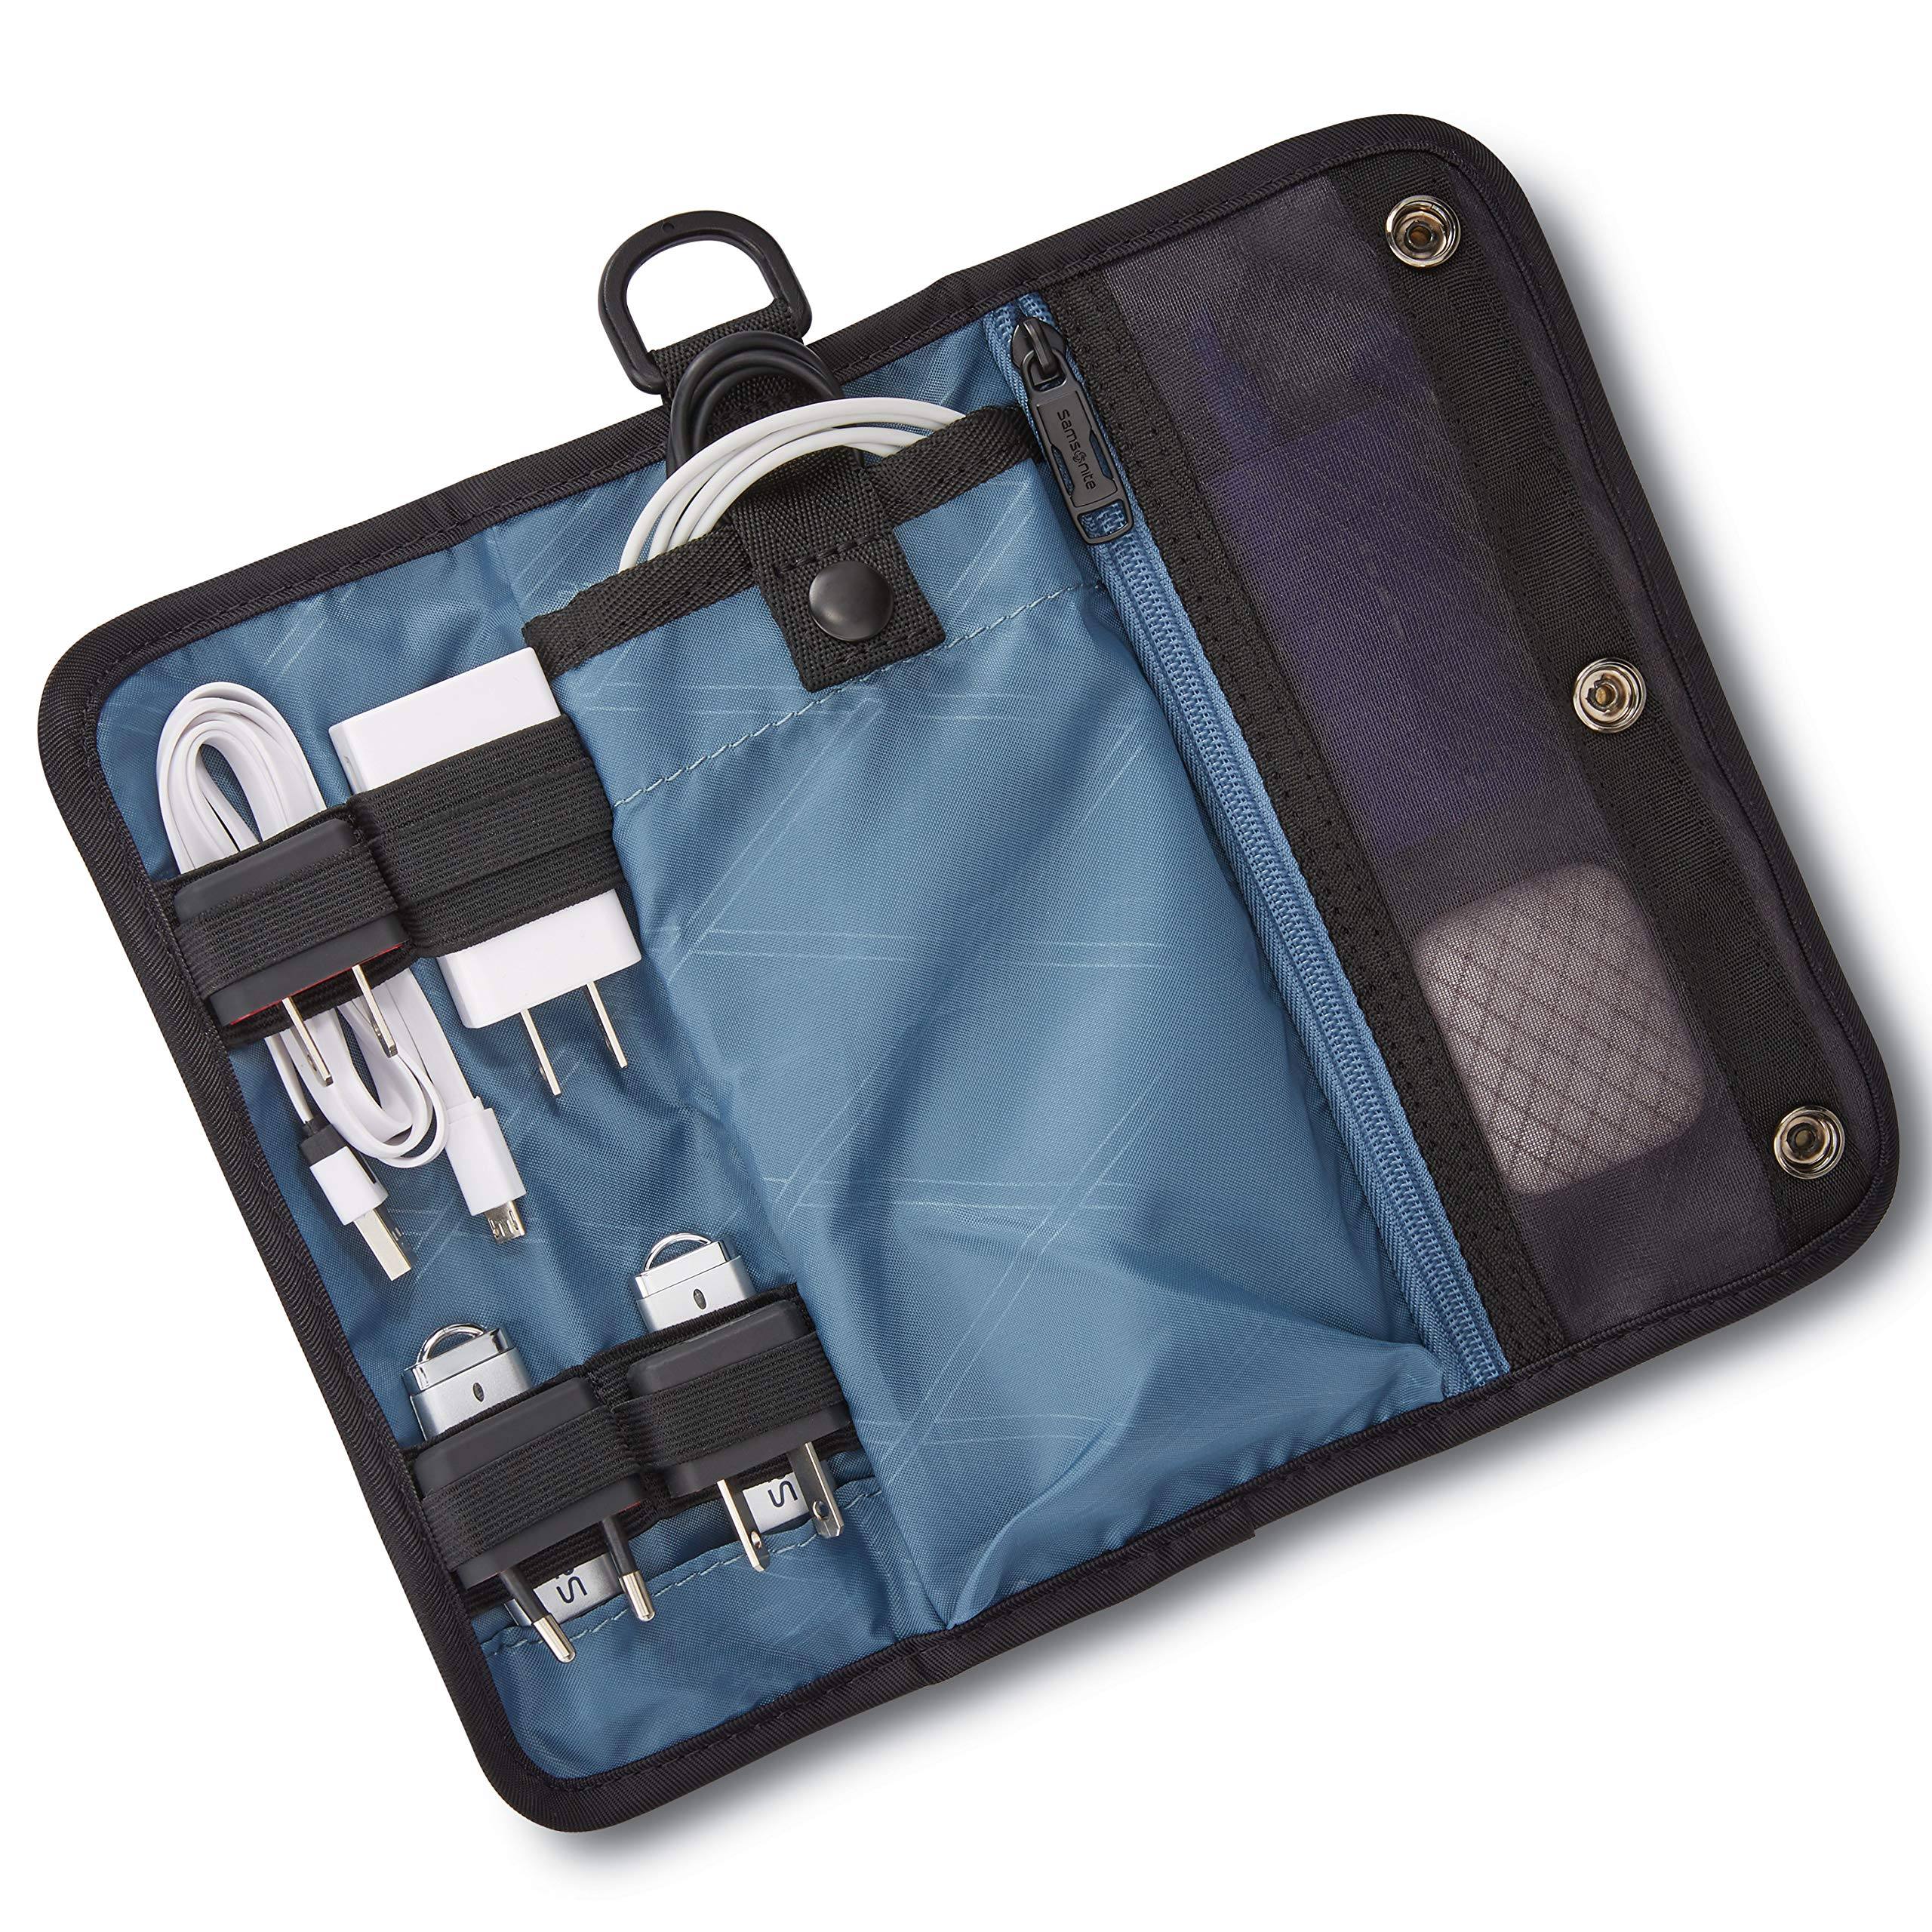 WANDF T302 Foldable Travel Duffel Bag for Luggage, Sports & Gym, Rip-stop  Water Resistant Nylon, Black - Walmart.com